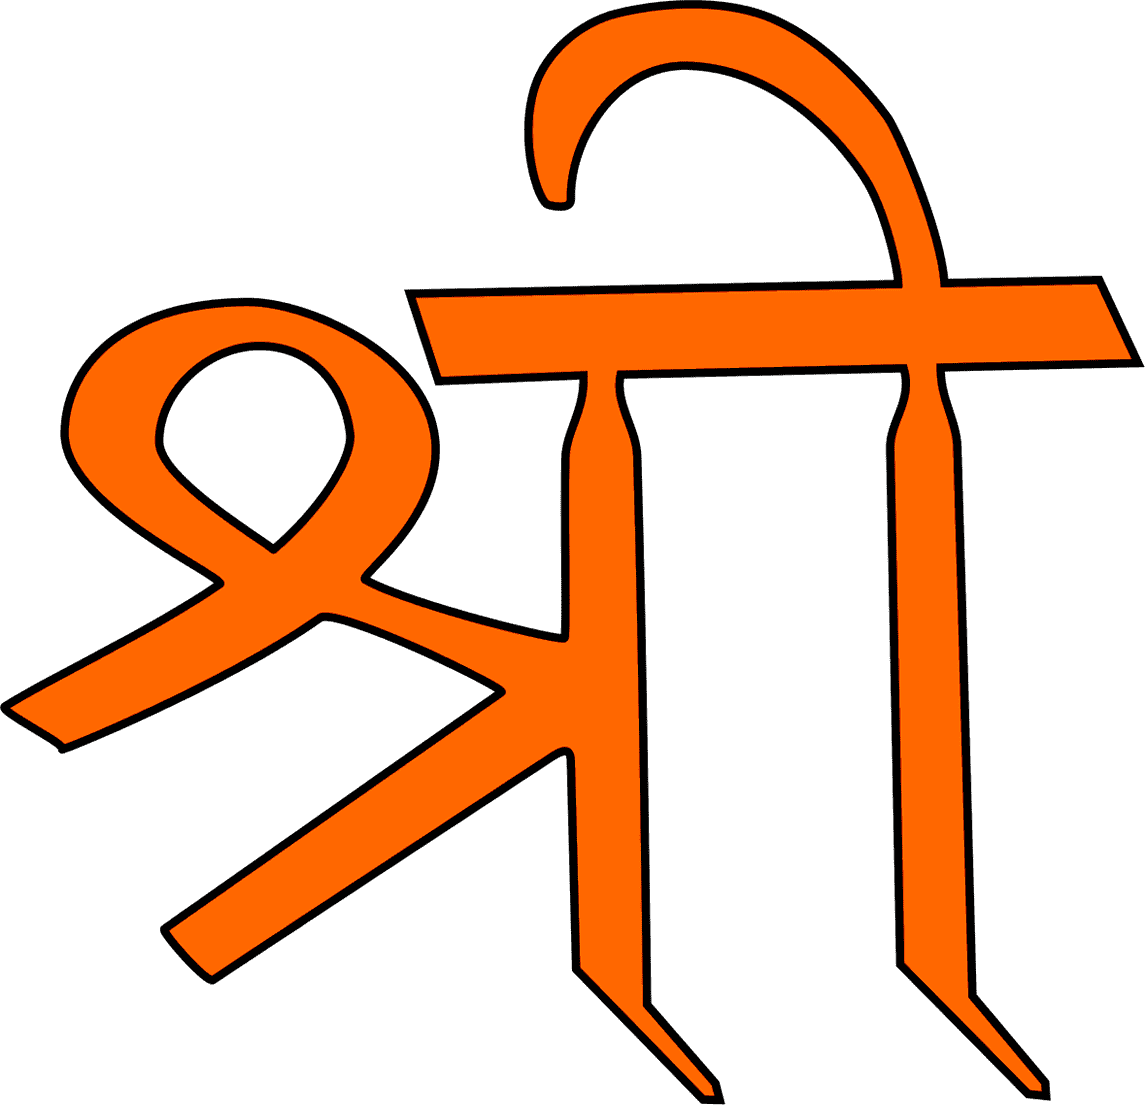 Shri - Free cultures icons